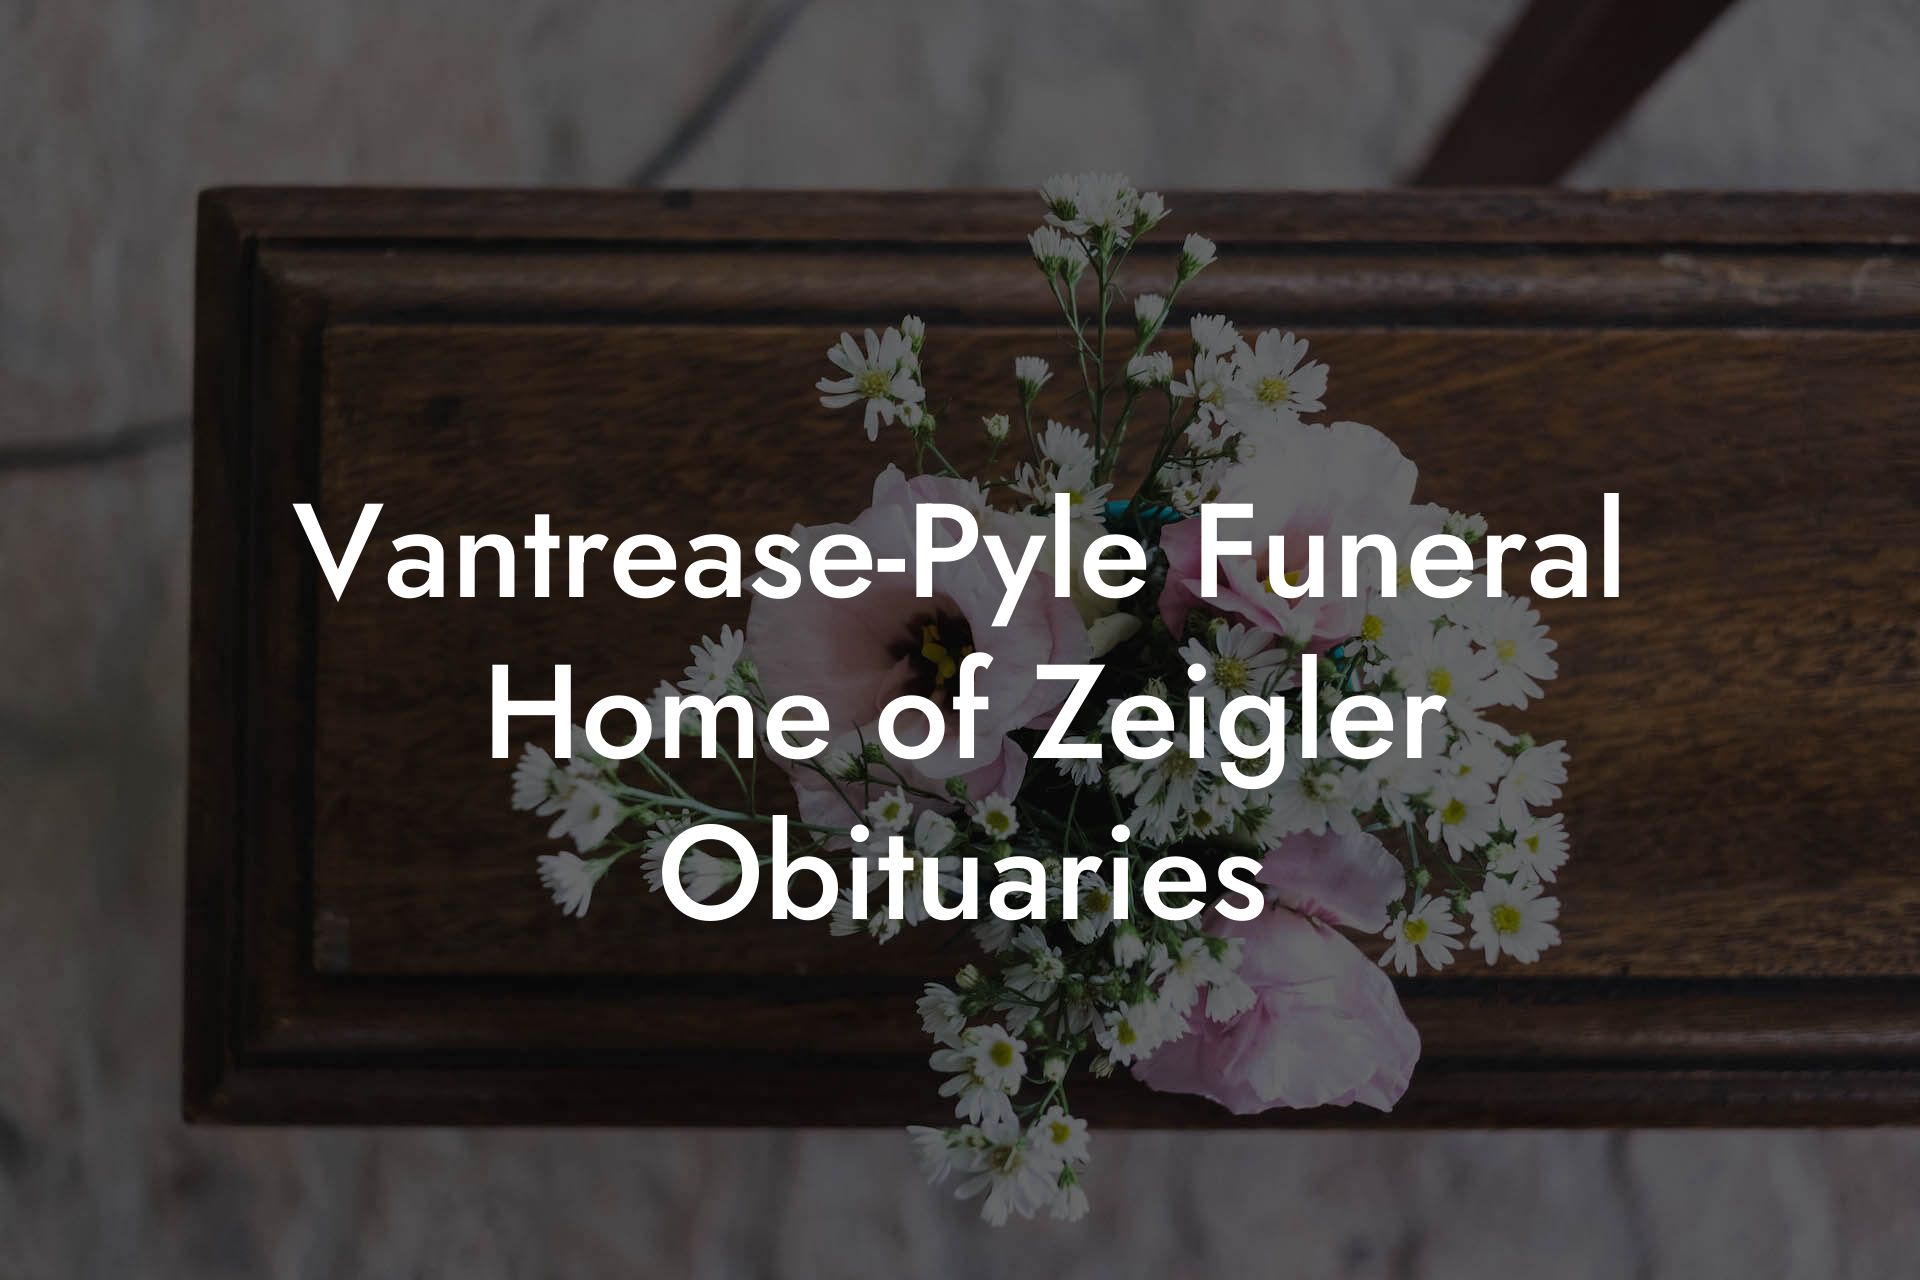 Vantrease-Pyle Funeral Home of Zeigler Obituaries